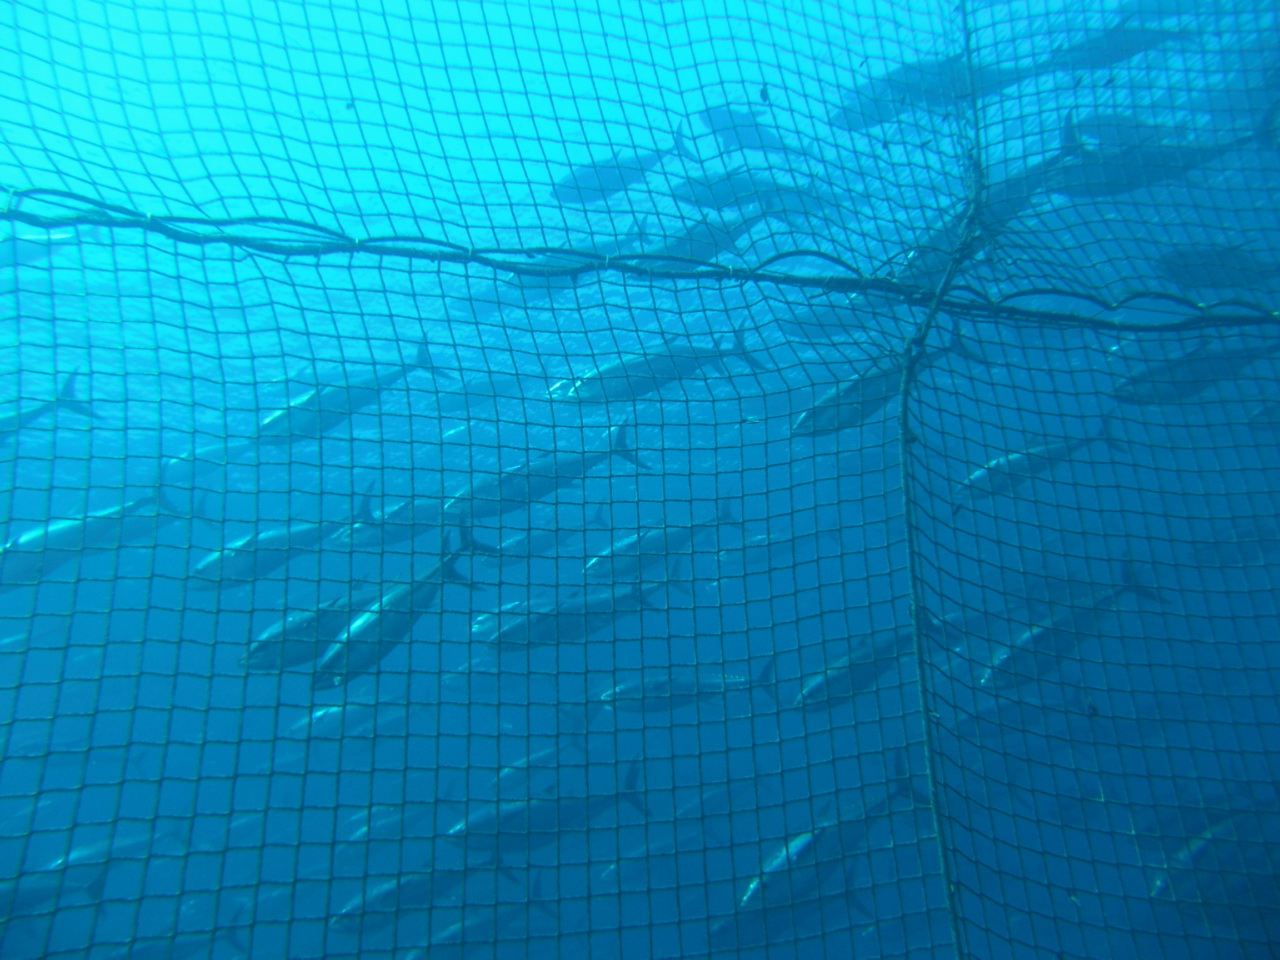 tuna trapped by net